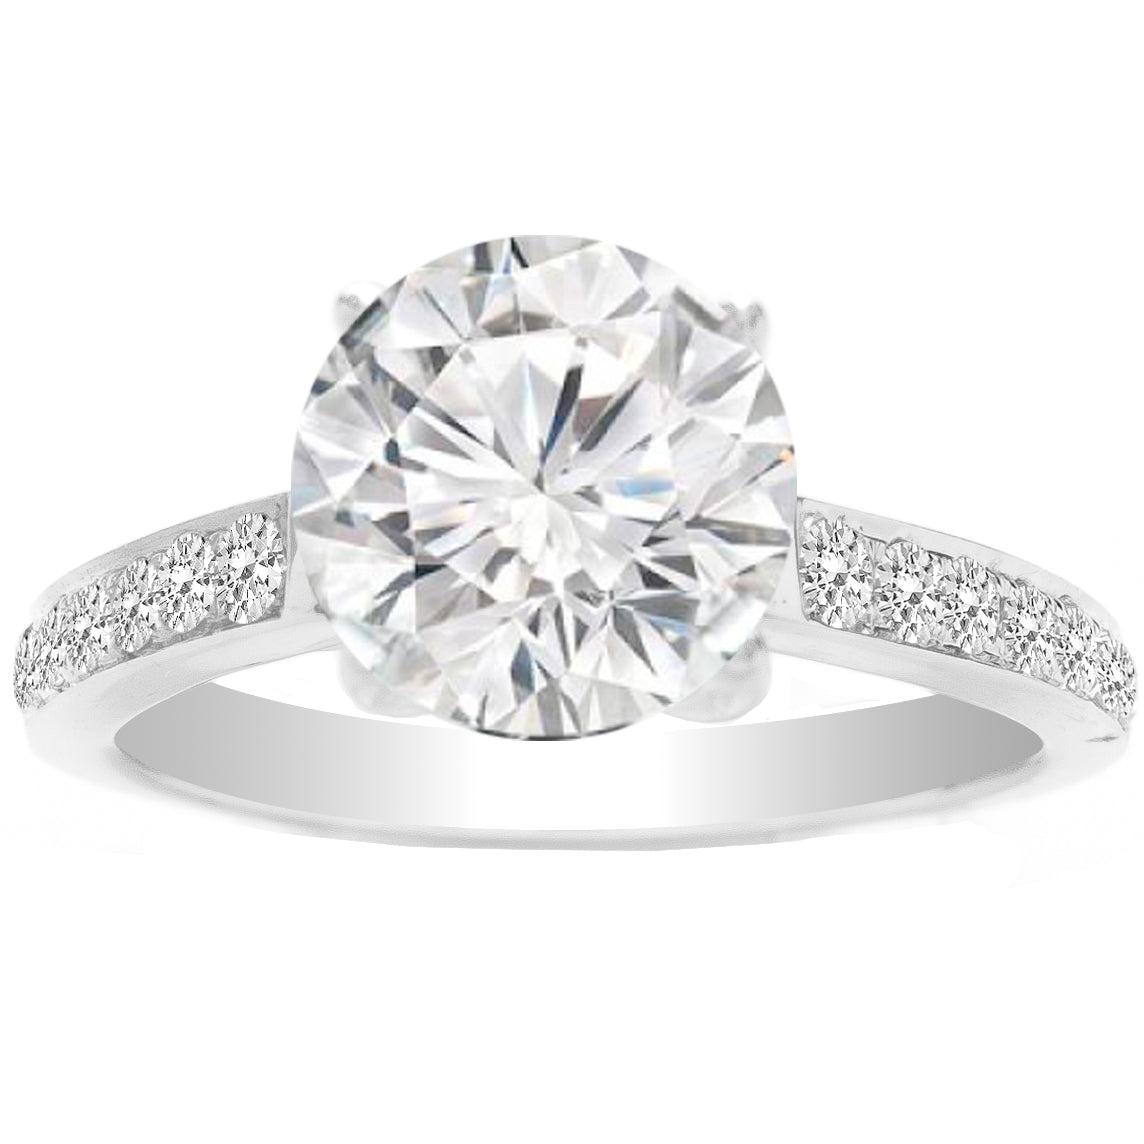 Crienza Diamond Ring in 14K White Gold; 0.28 ctw